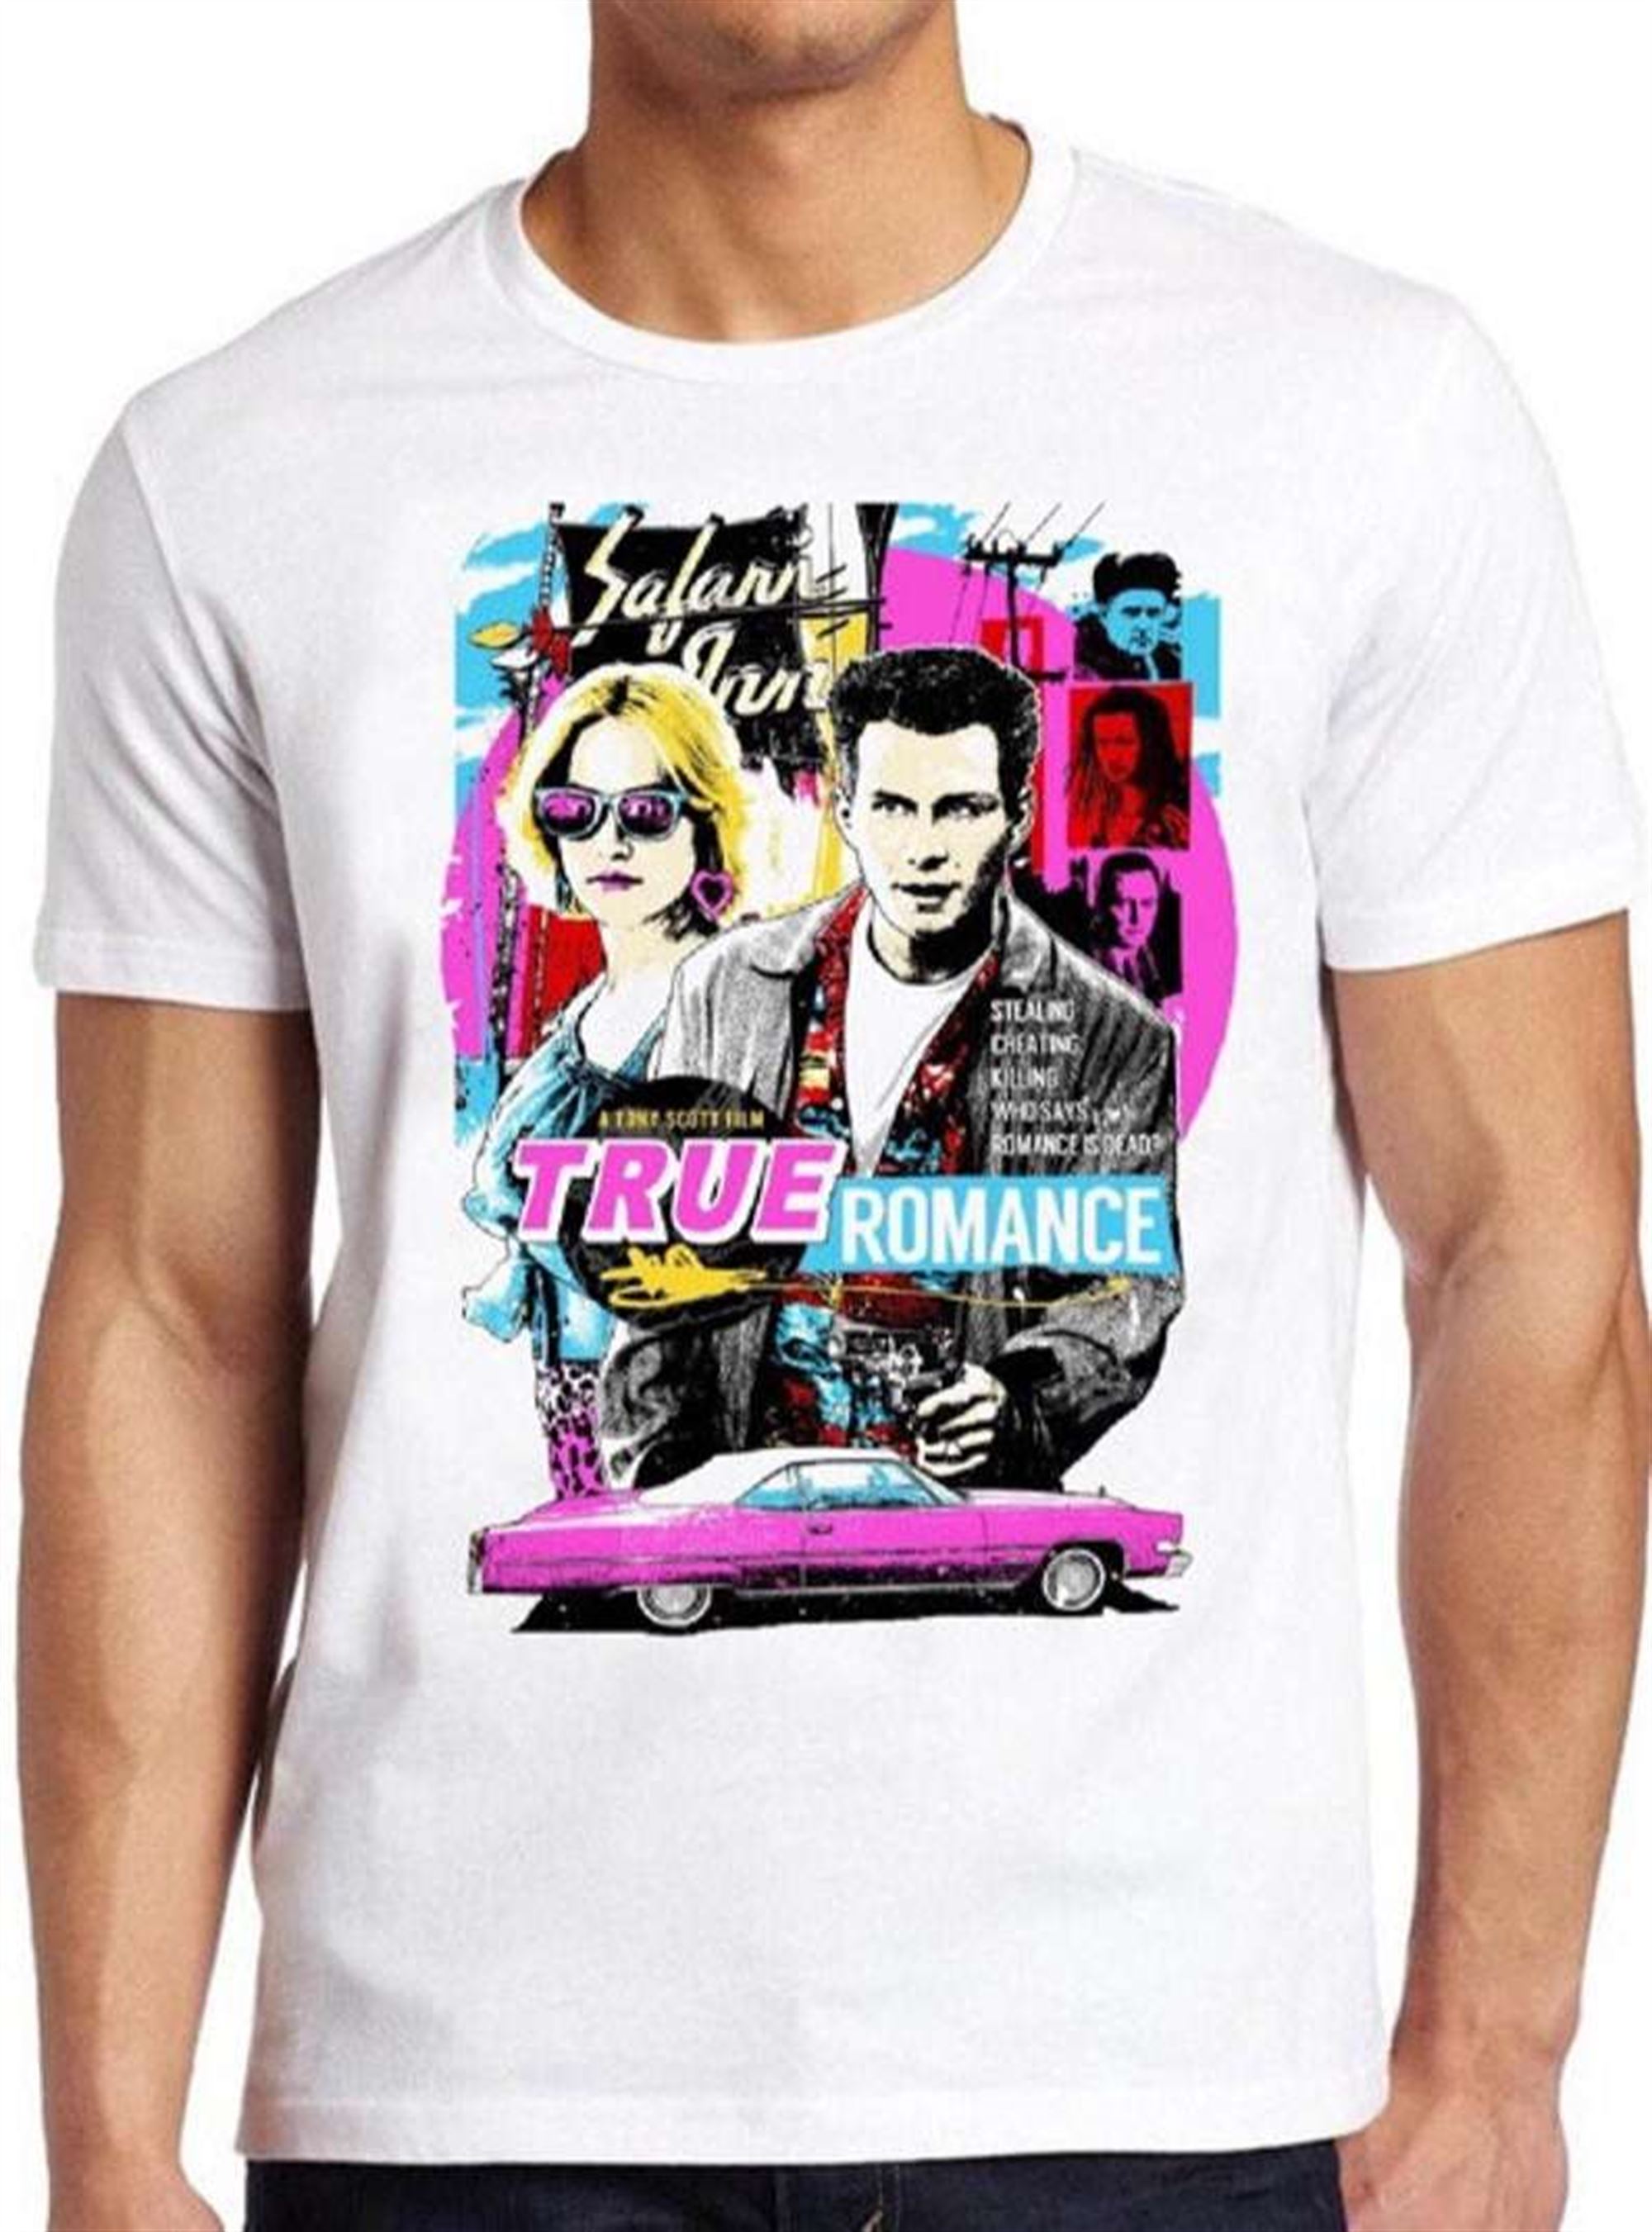 True Romance T Shirt Movie Poster Slater Hopper Tarantino Full Size Up To 5xl